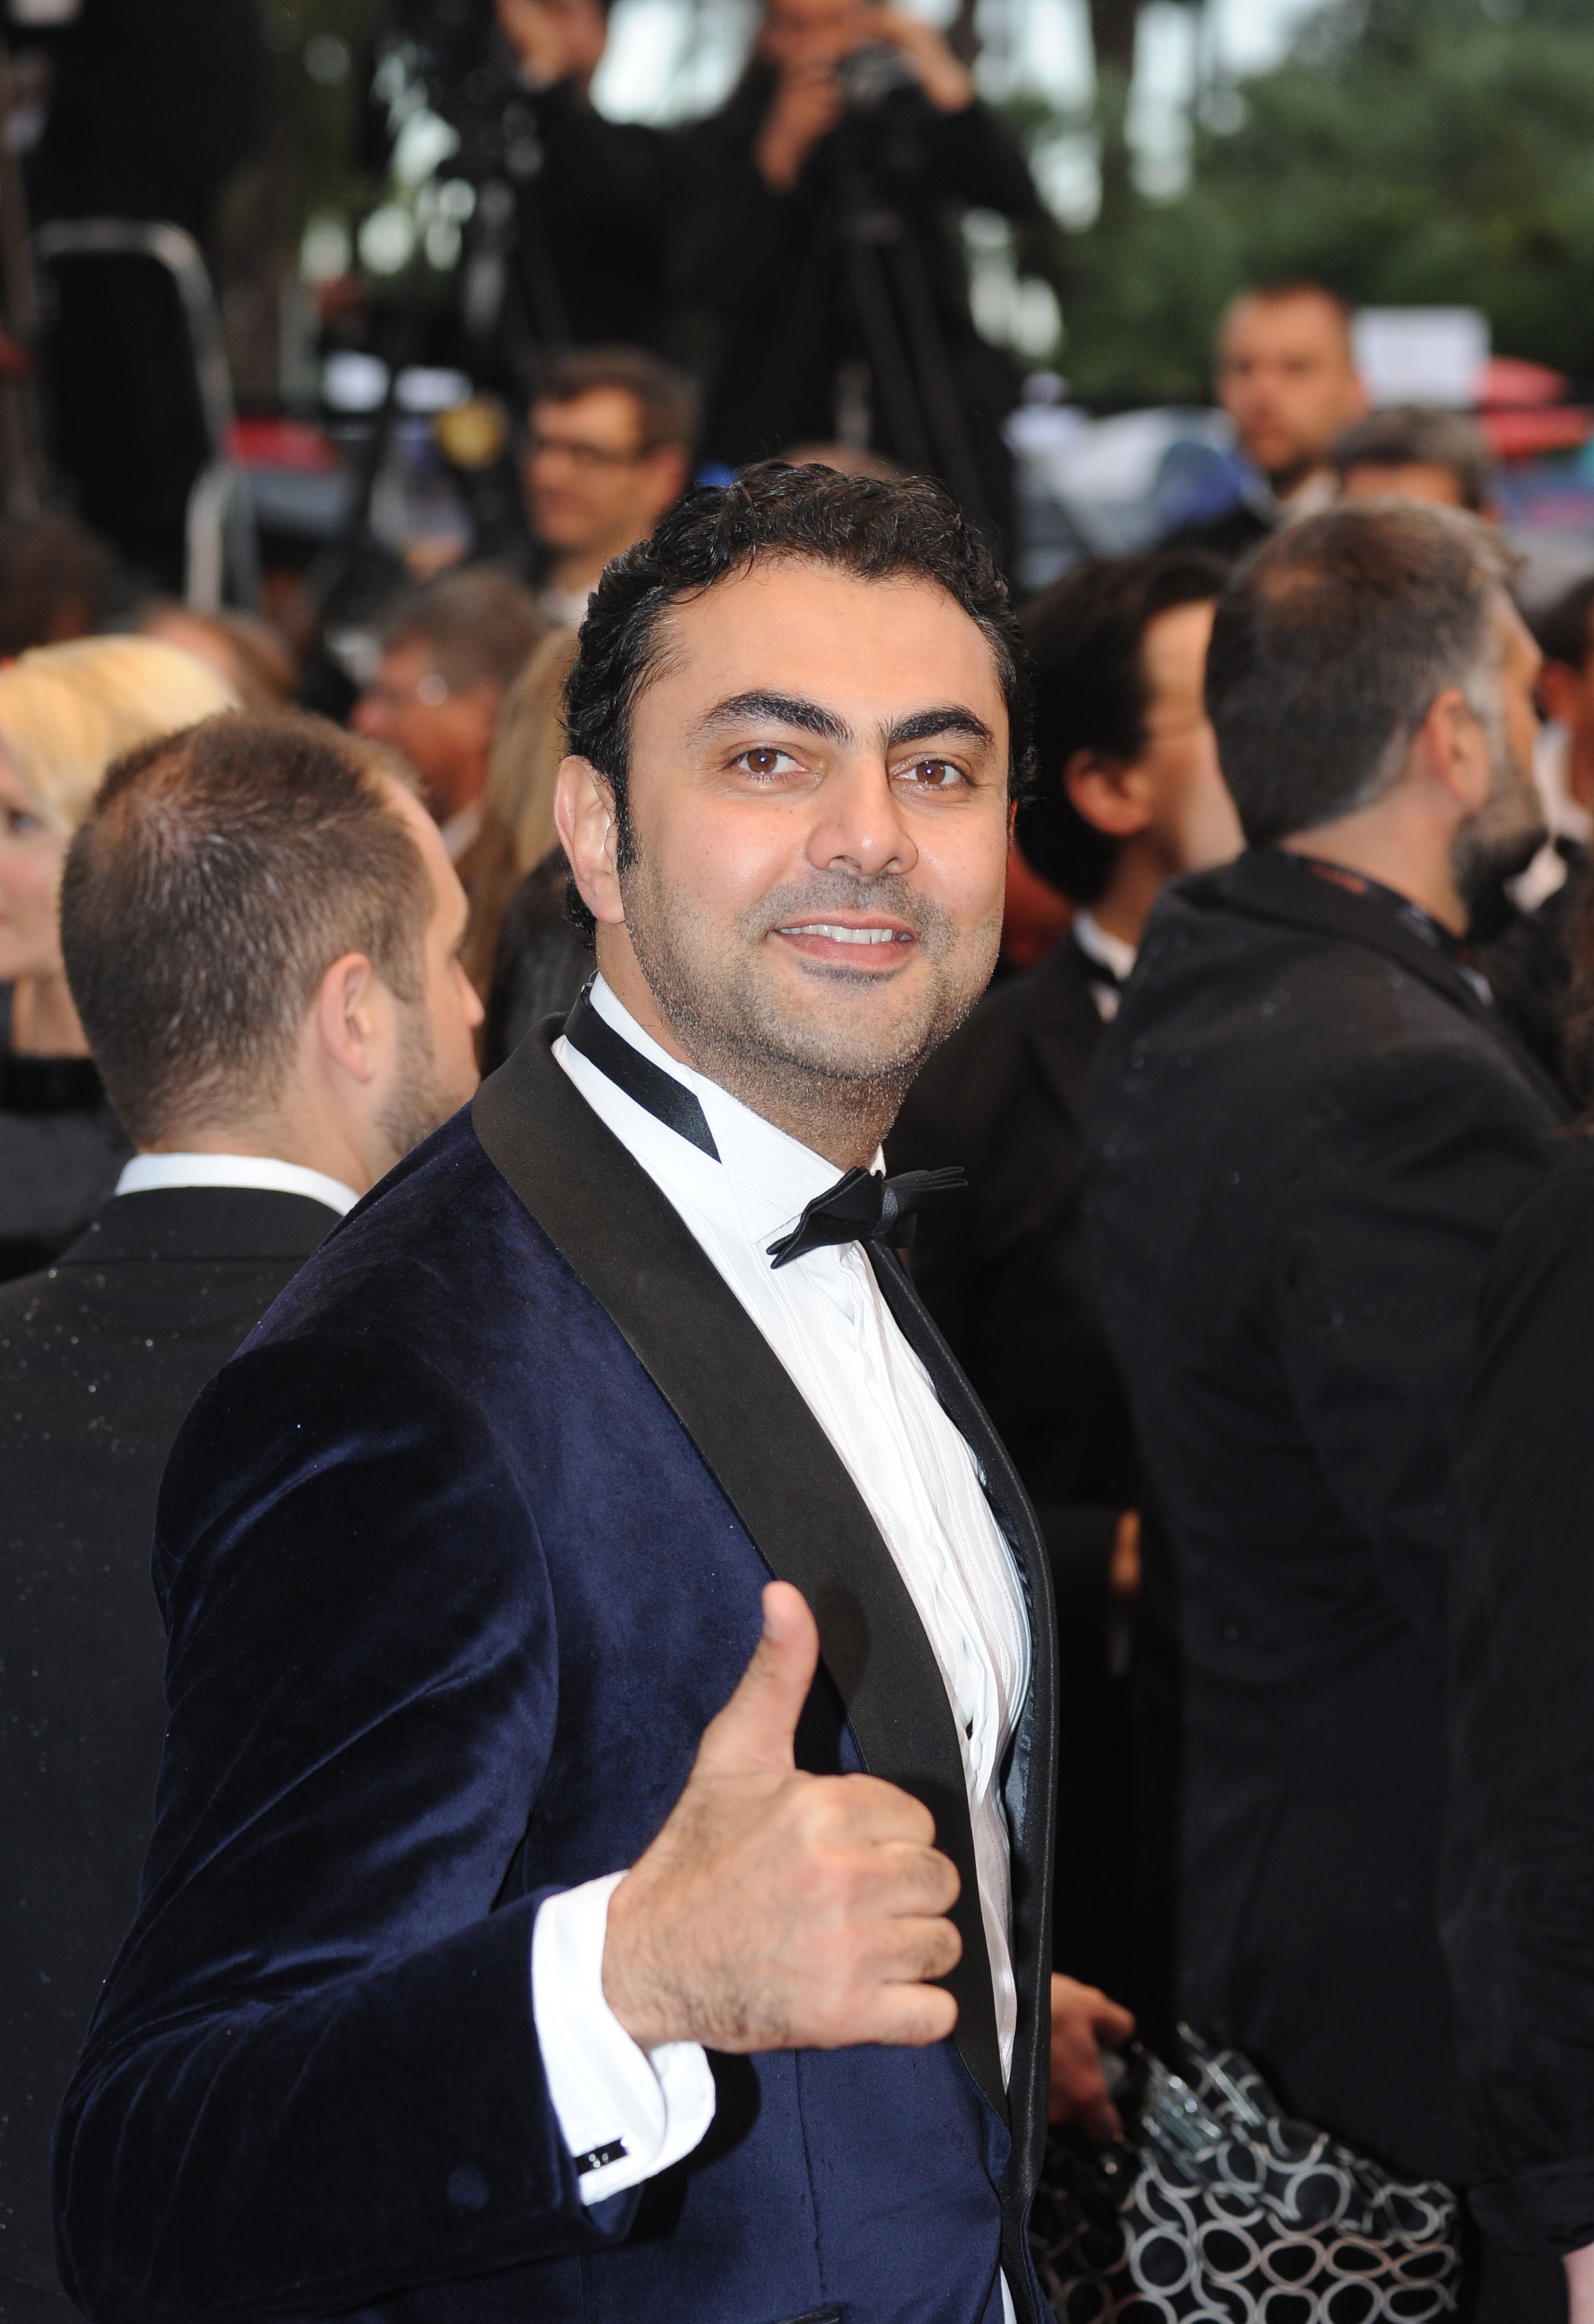 2013 Cannes Film Festival, Mohamed Karim at the Red Carpet for his Film Premiere 